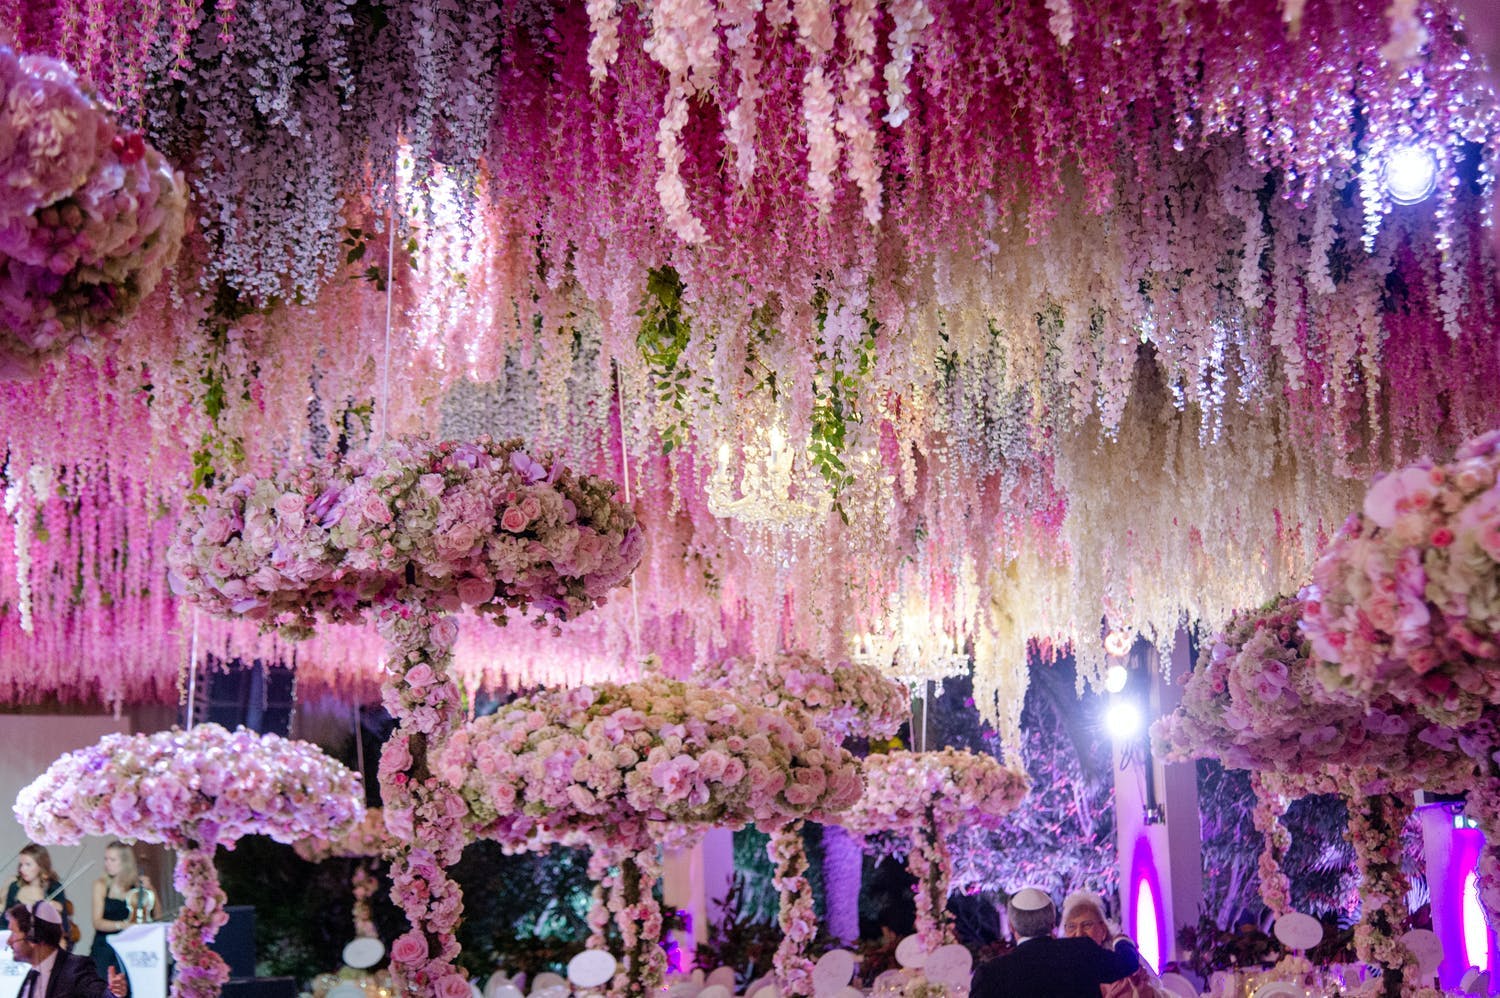 Wedding Reception With Lavish Floral-Fringe Ceiling Décor and Floral Parasol-Shaped Centerpieces | PartySlate